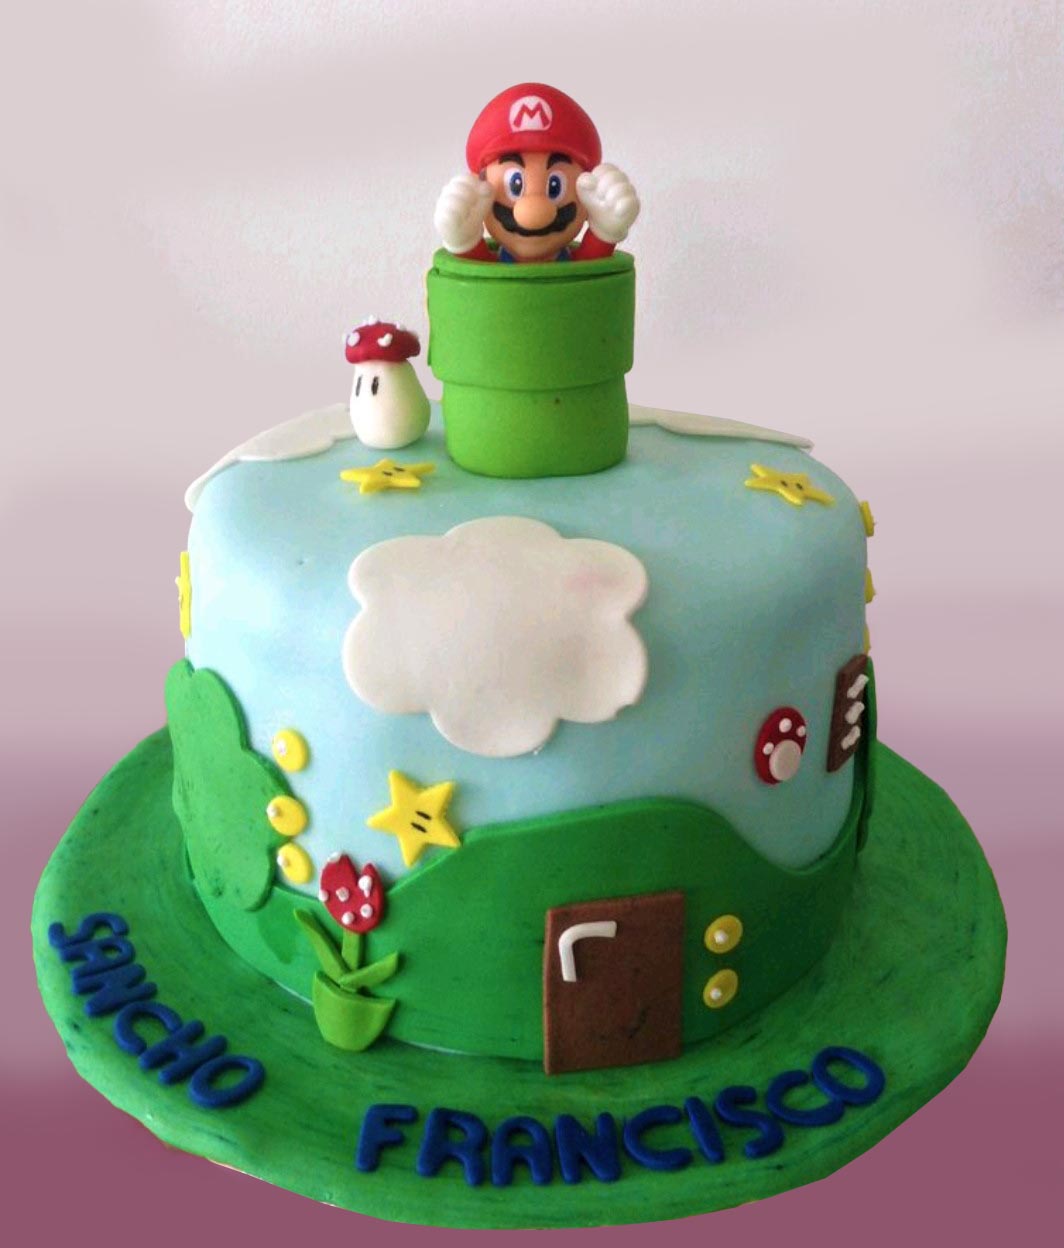 Cakes by Kristen H.: Super Mario Bros. Cake